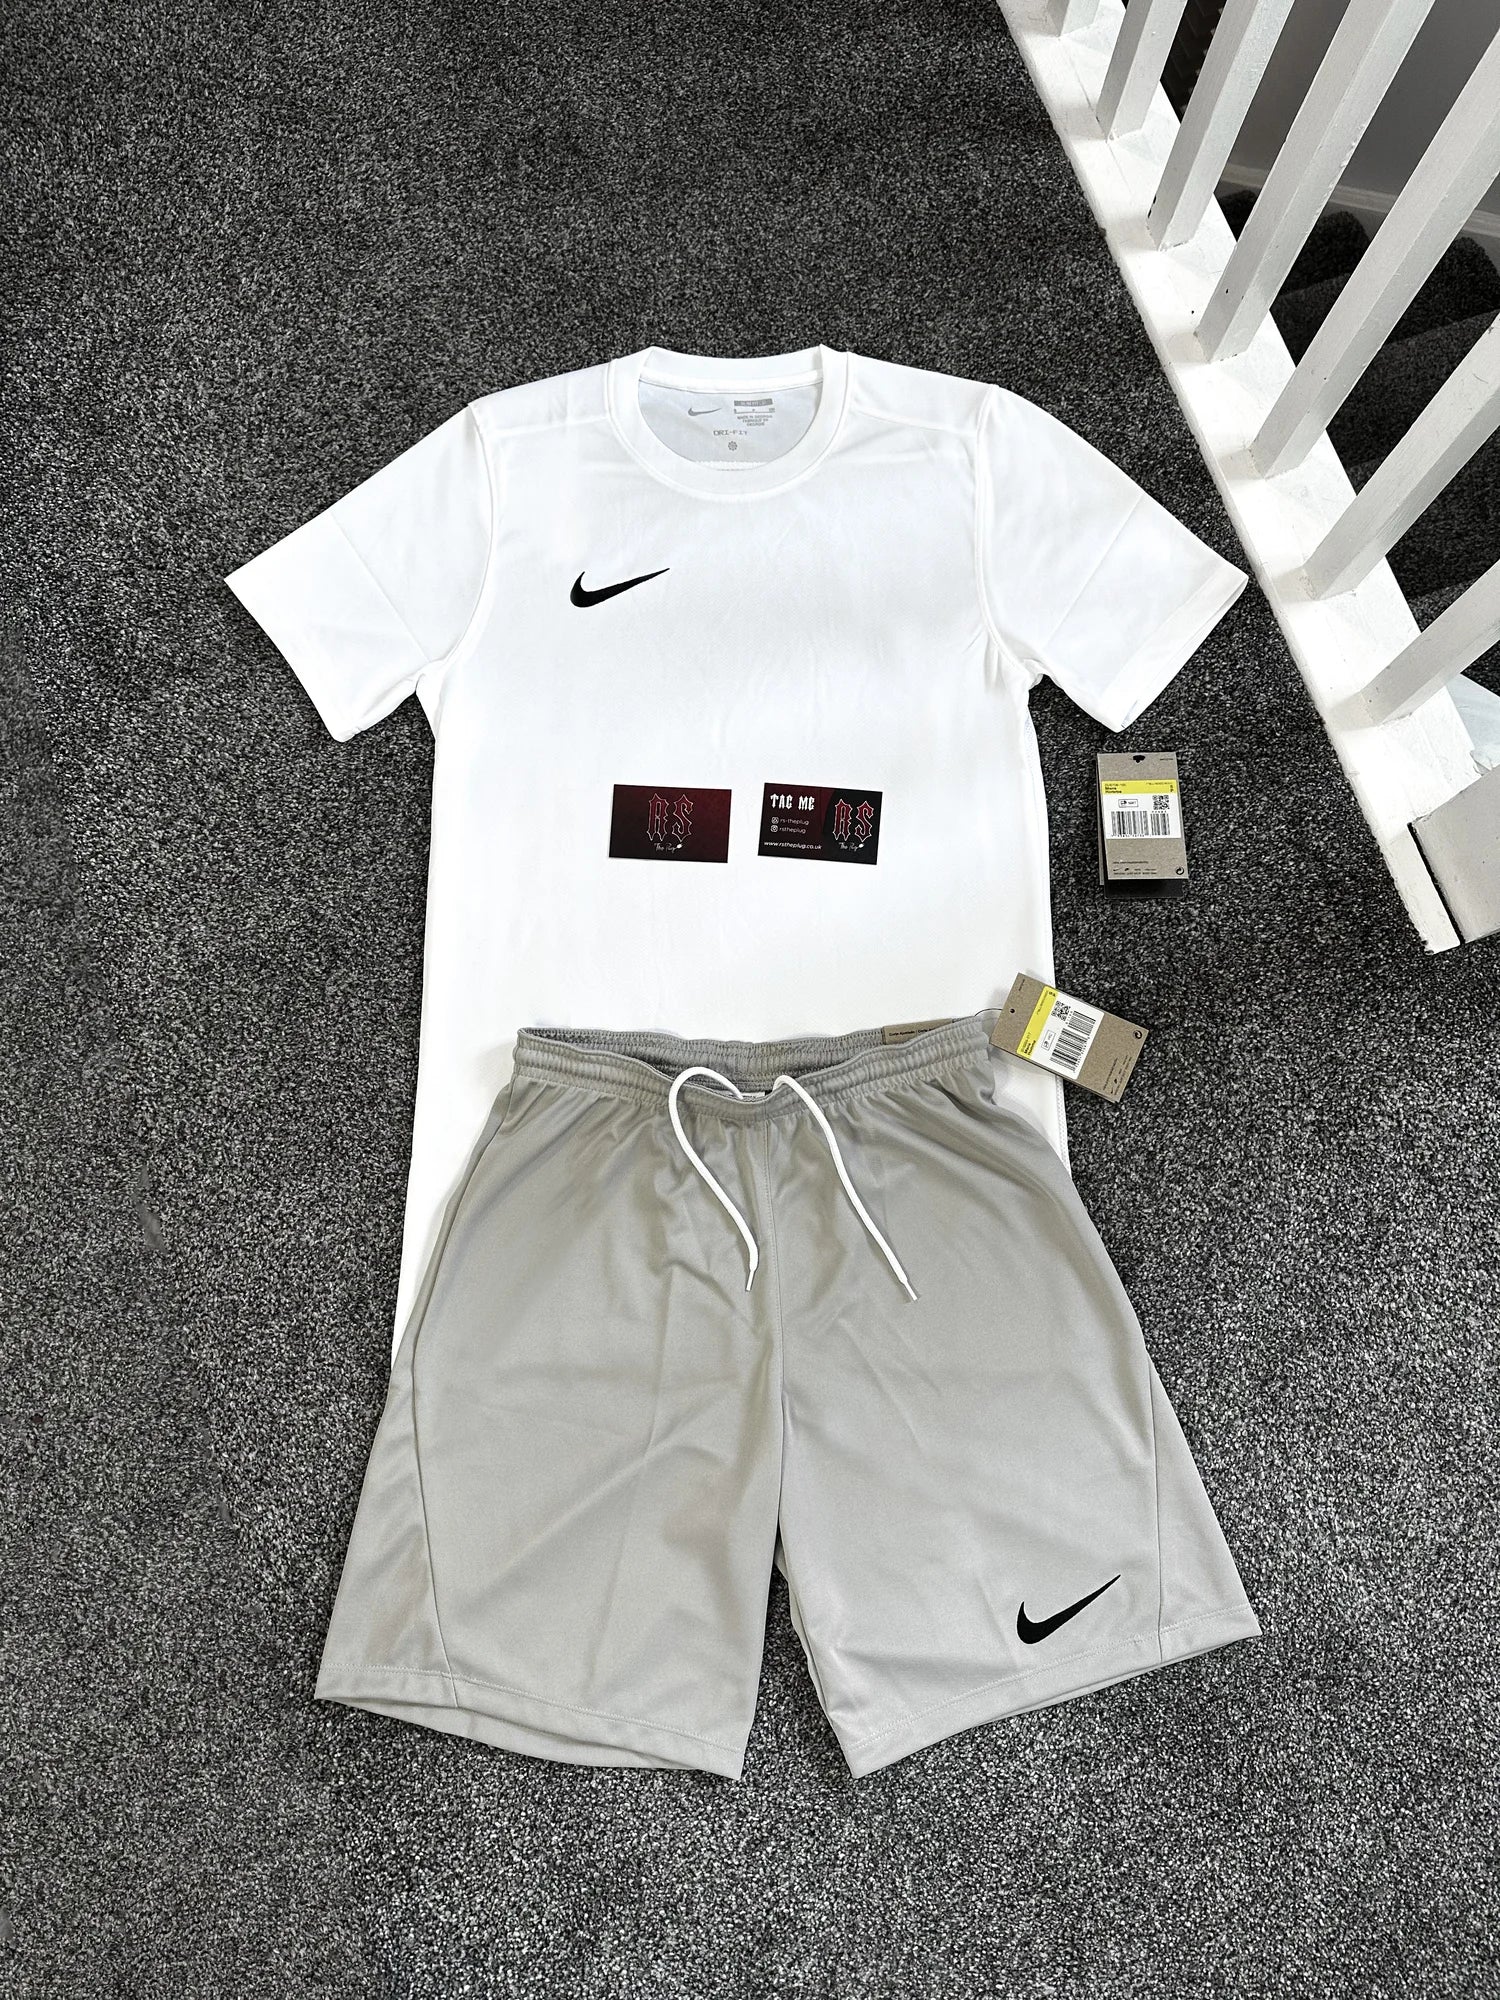 Nike Dri Fit Short Set White/Grey